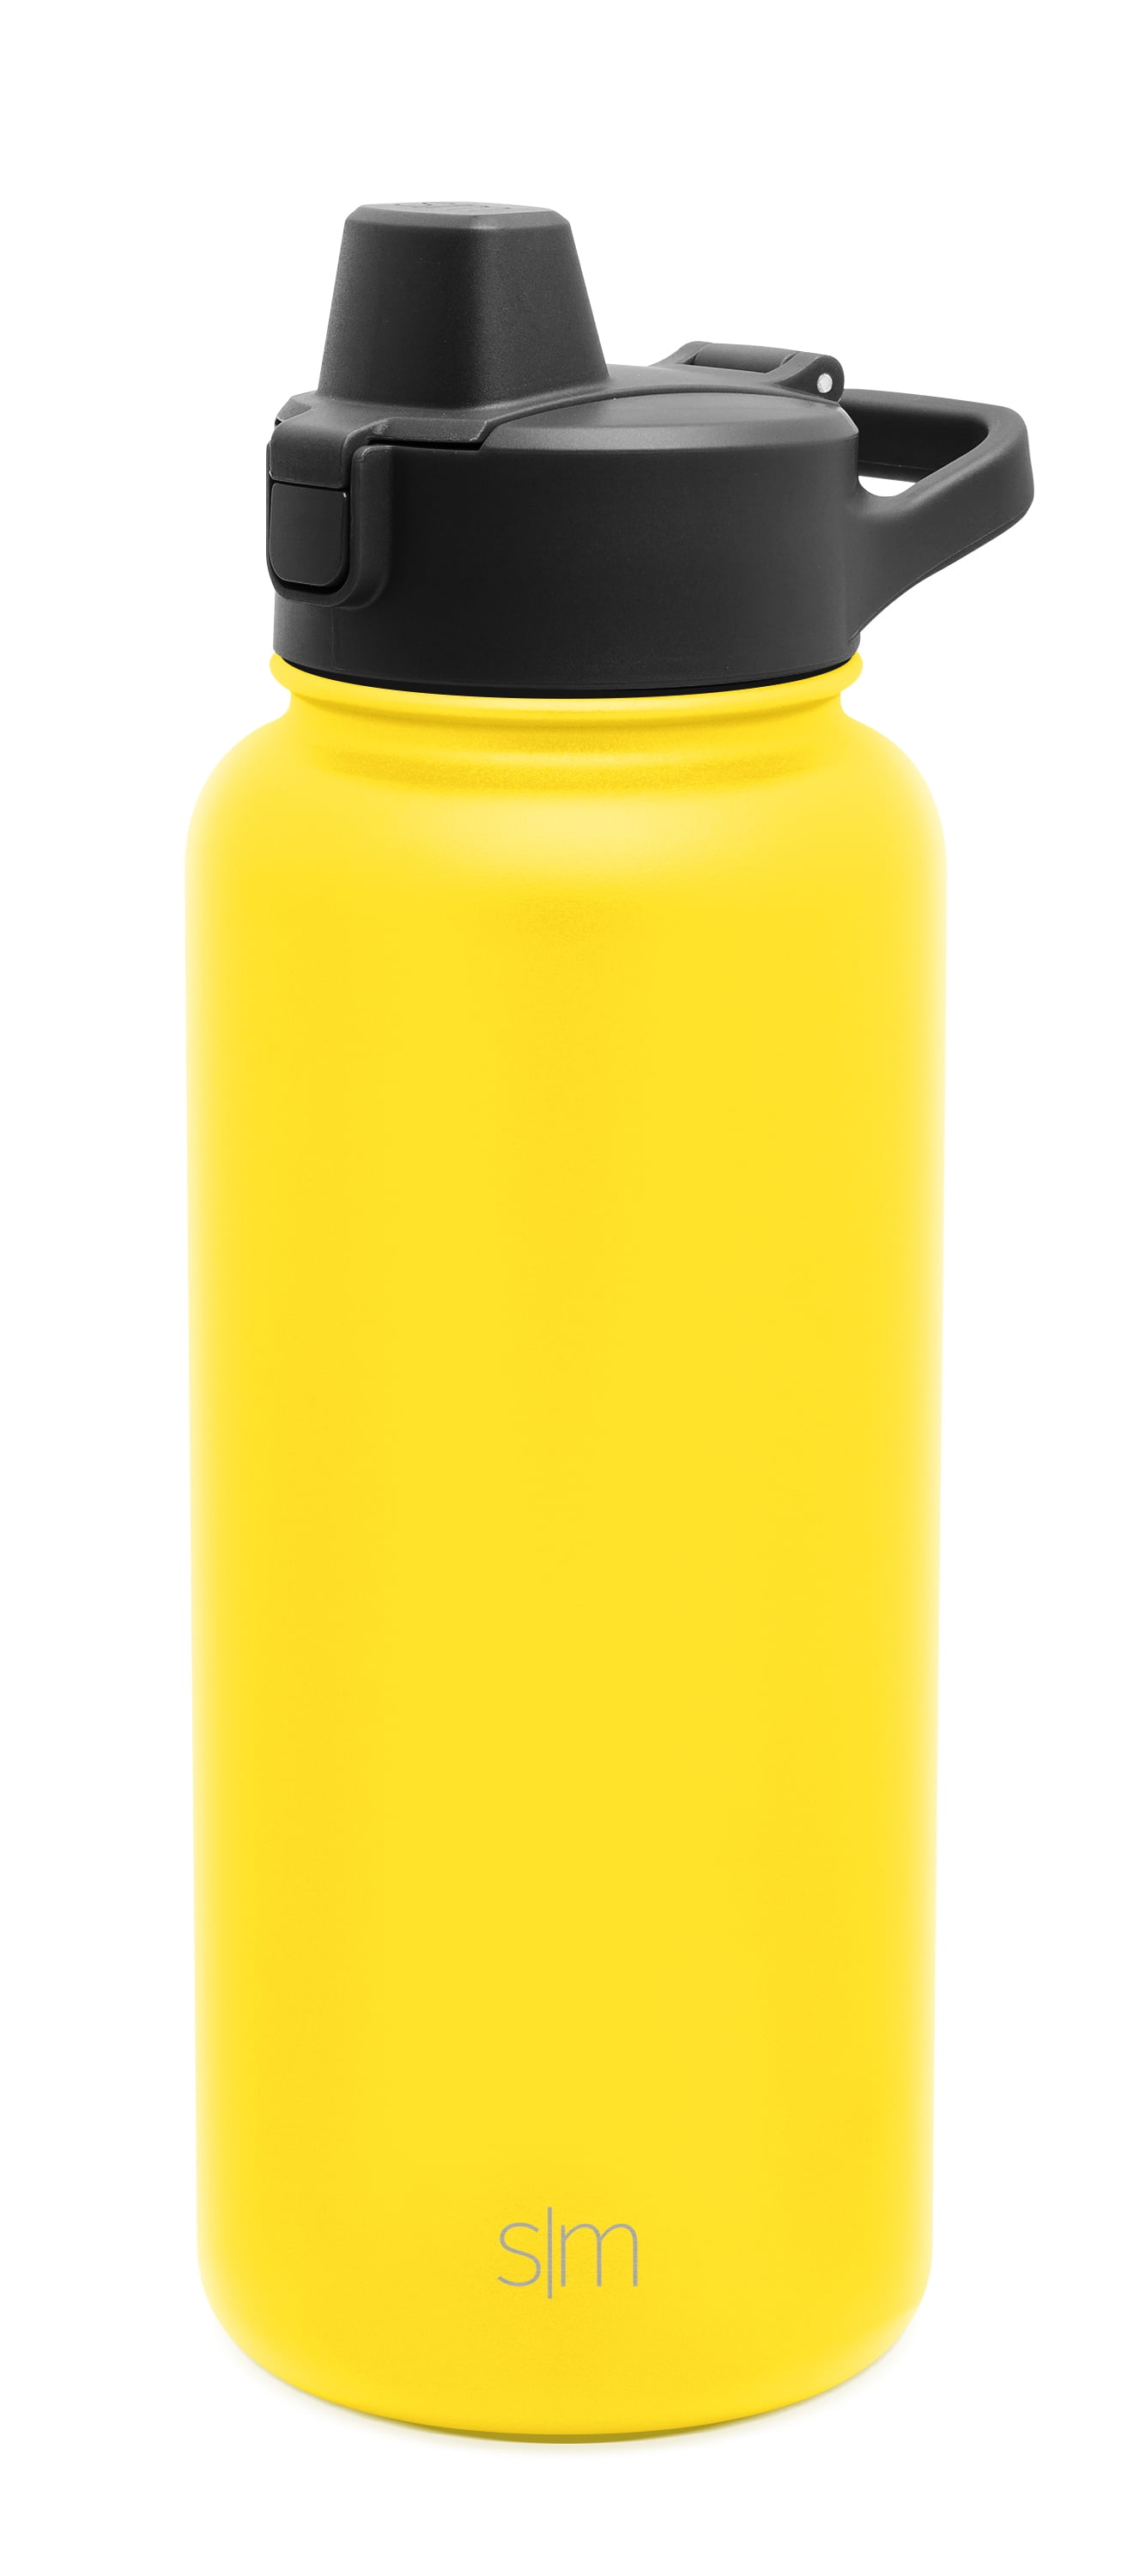 Lug Stainless Bottle - 28 oz.